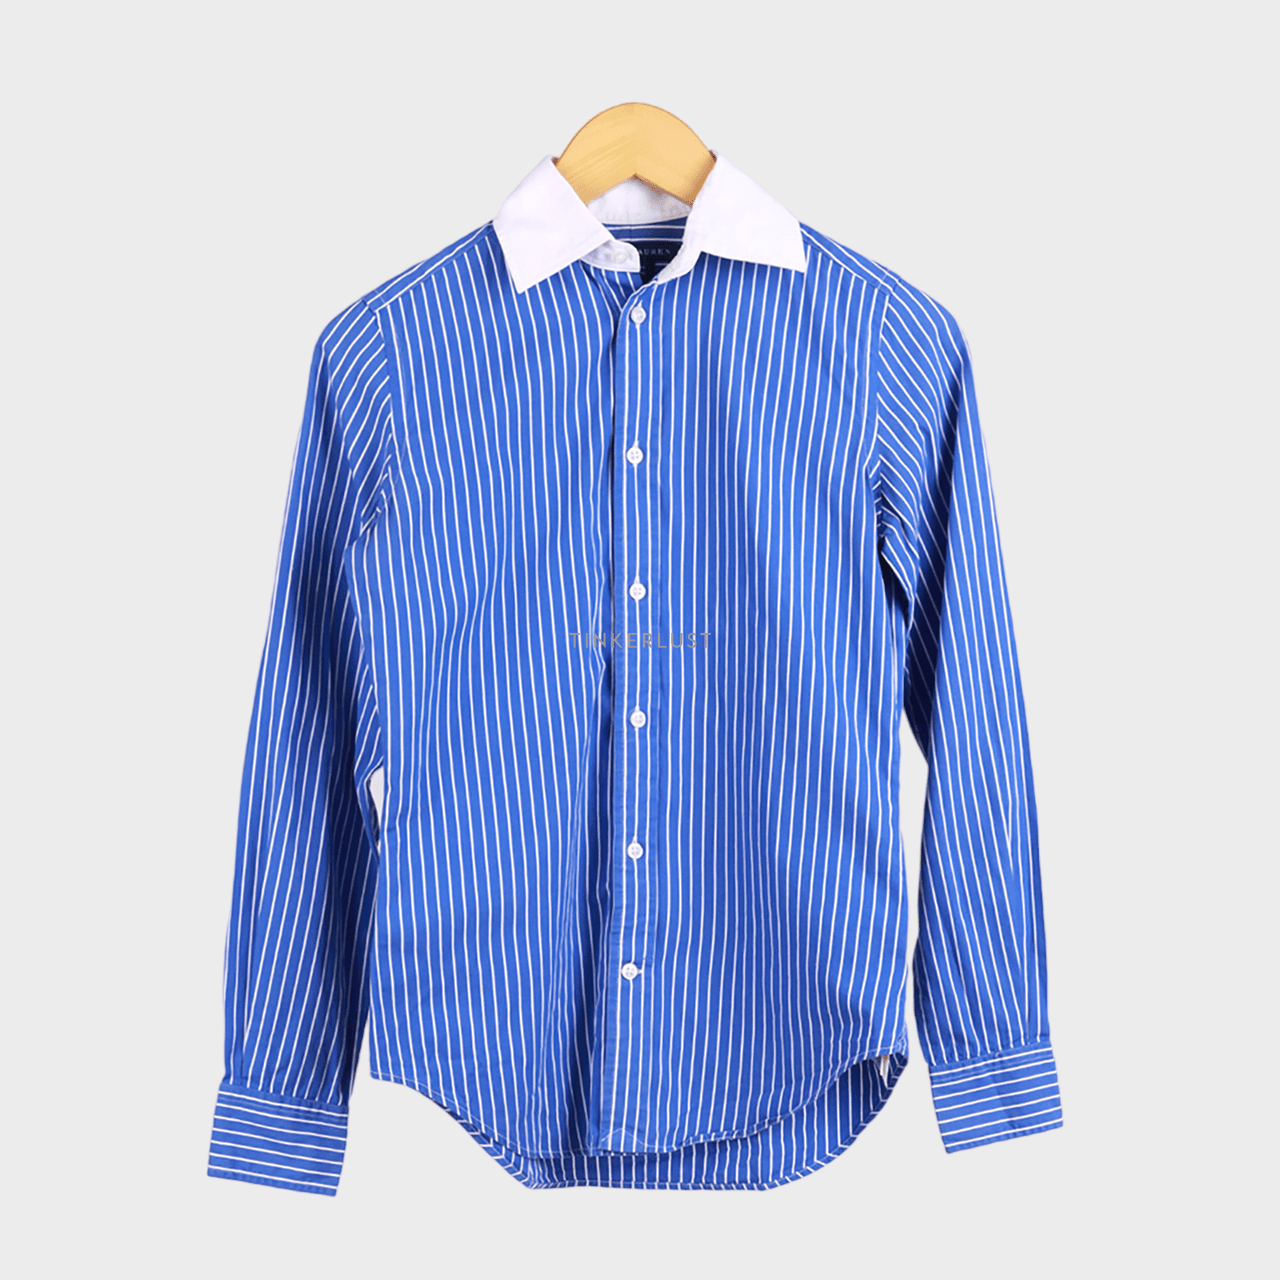 Ralph Lauren Blue & White Stripes Shirt